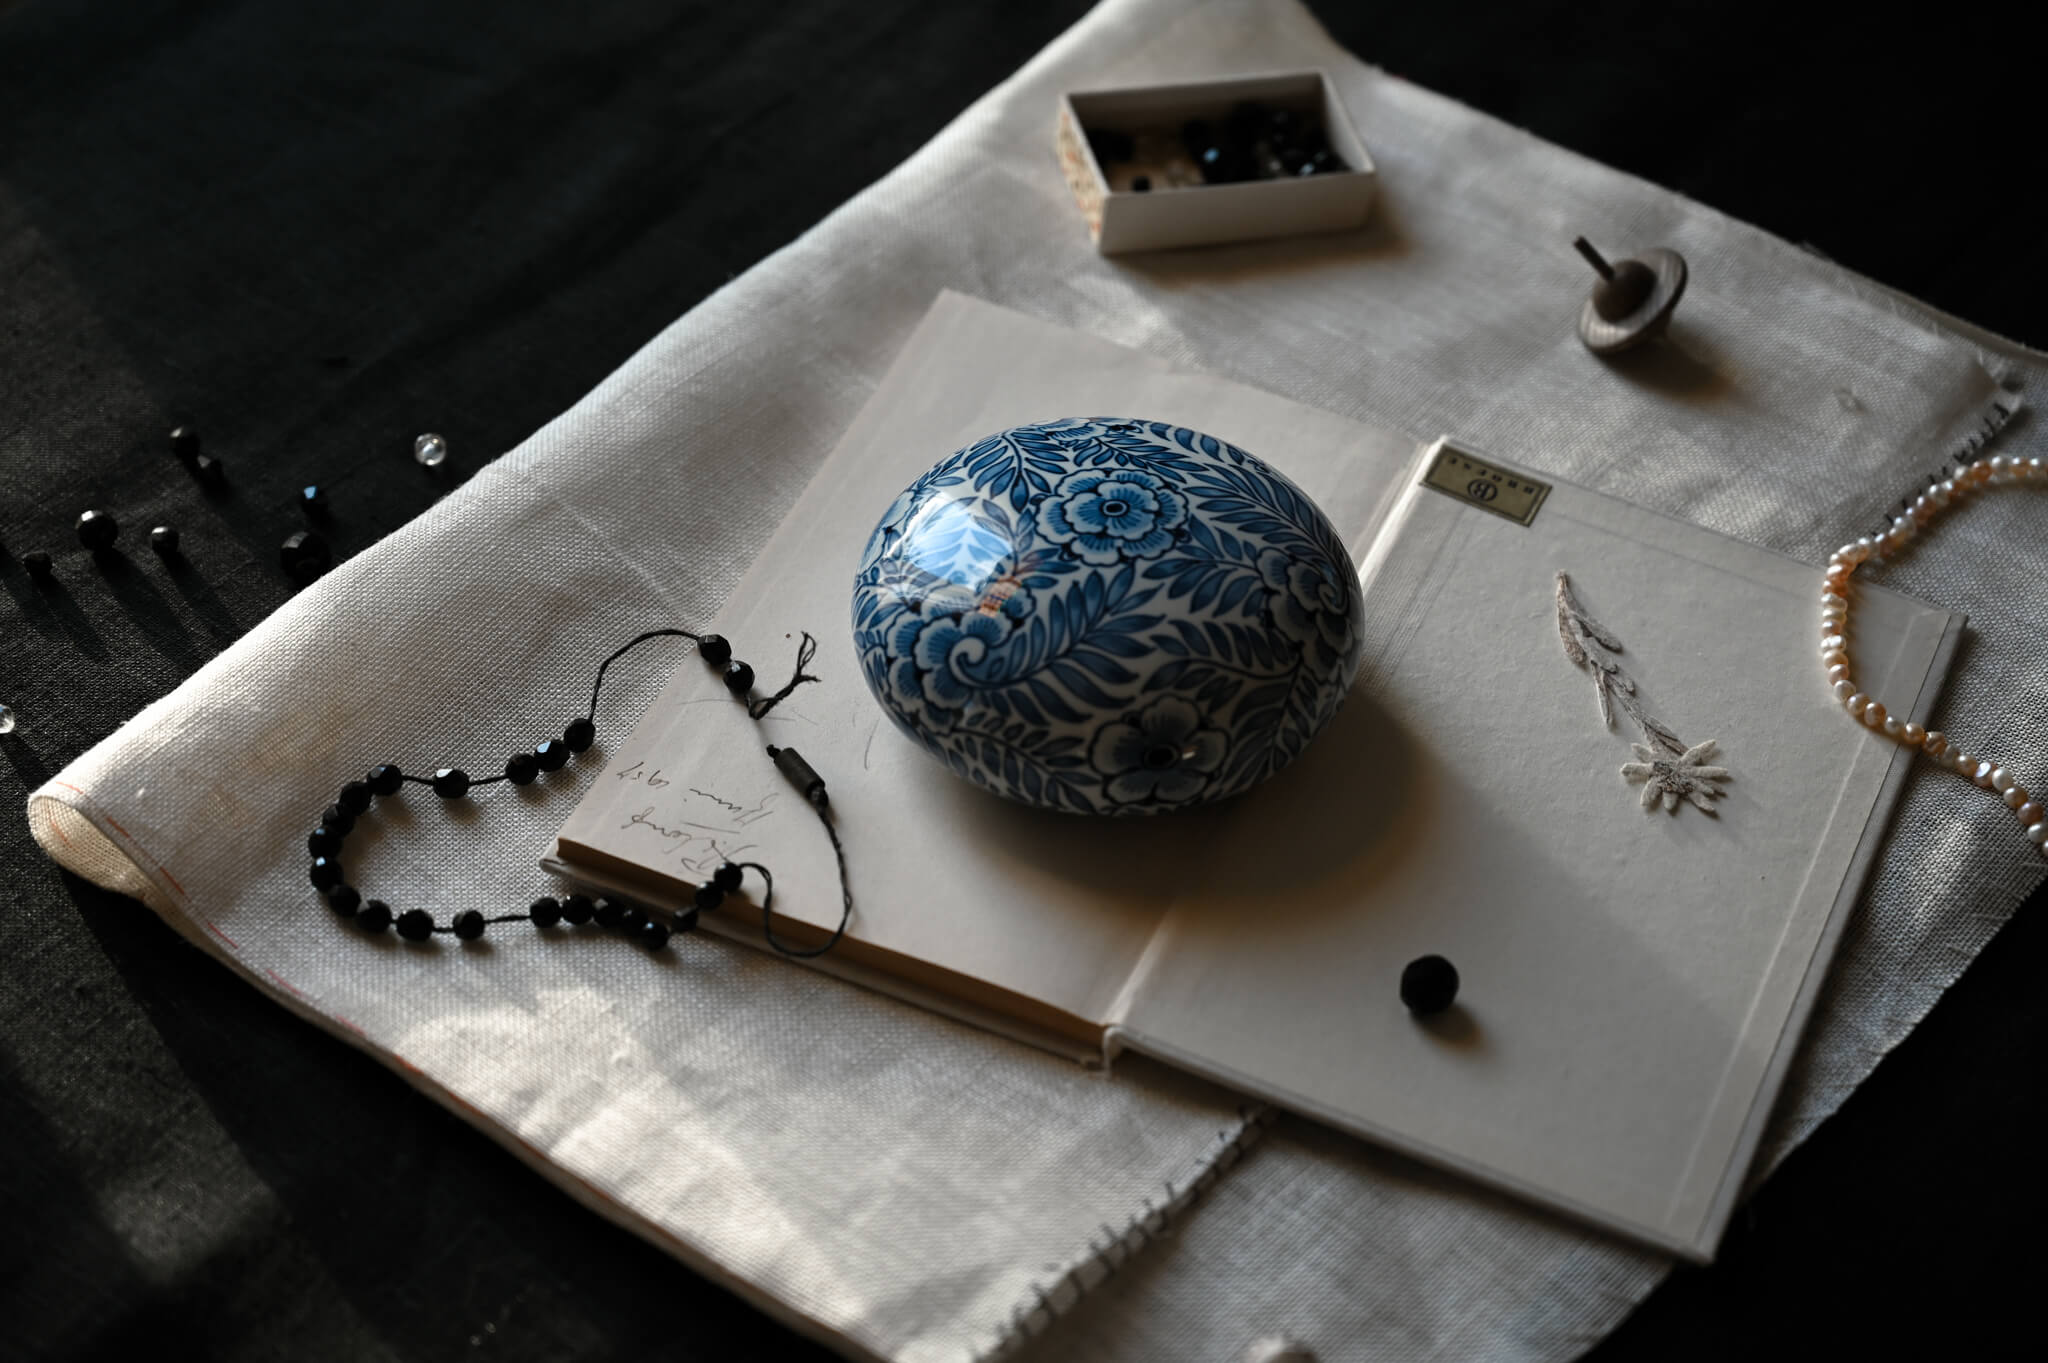 Ellis en Michiel Royal Delft Memento blue pebble ceramic urn